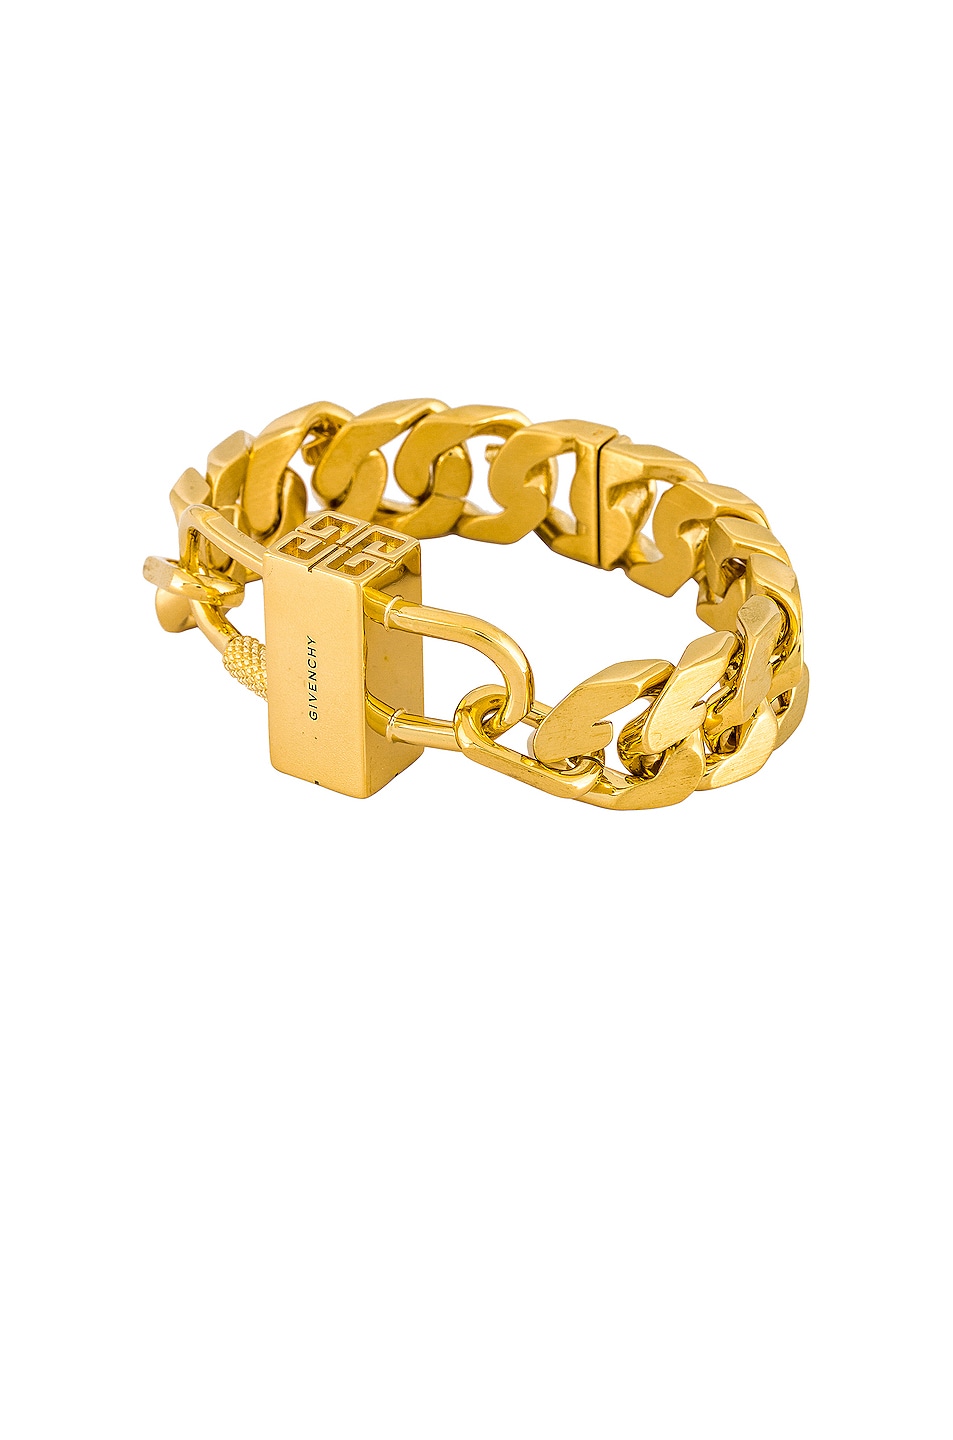 Givenchy G Chain Lock Bracelet in Golden Yellow | FWRD